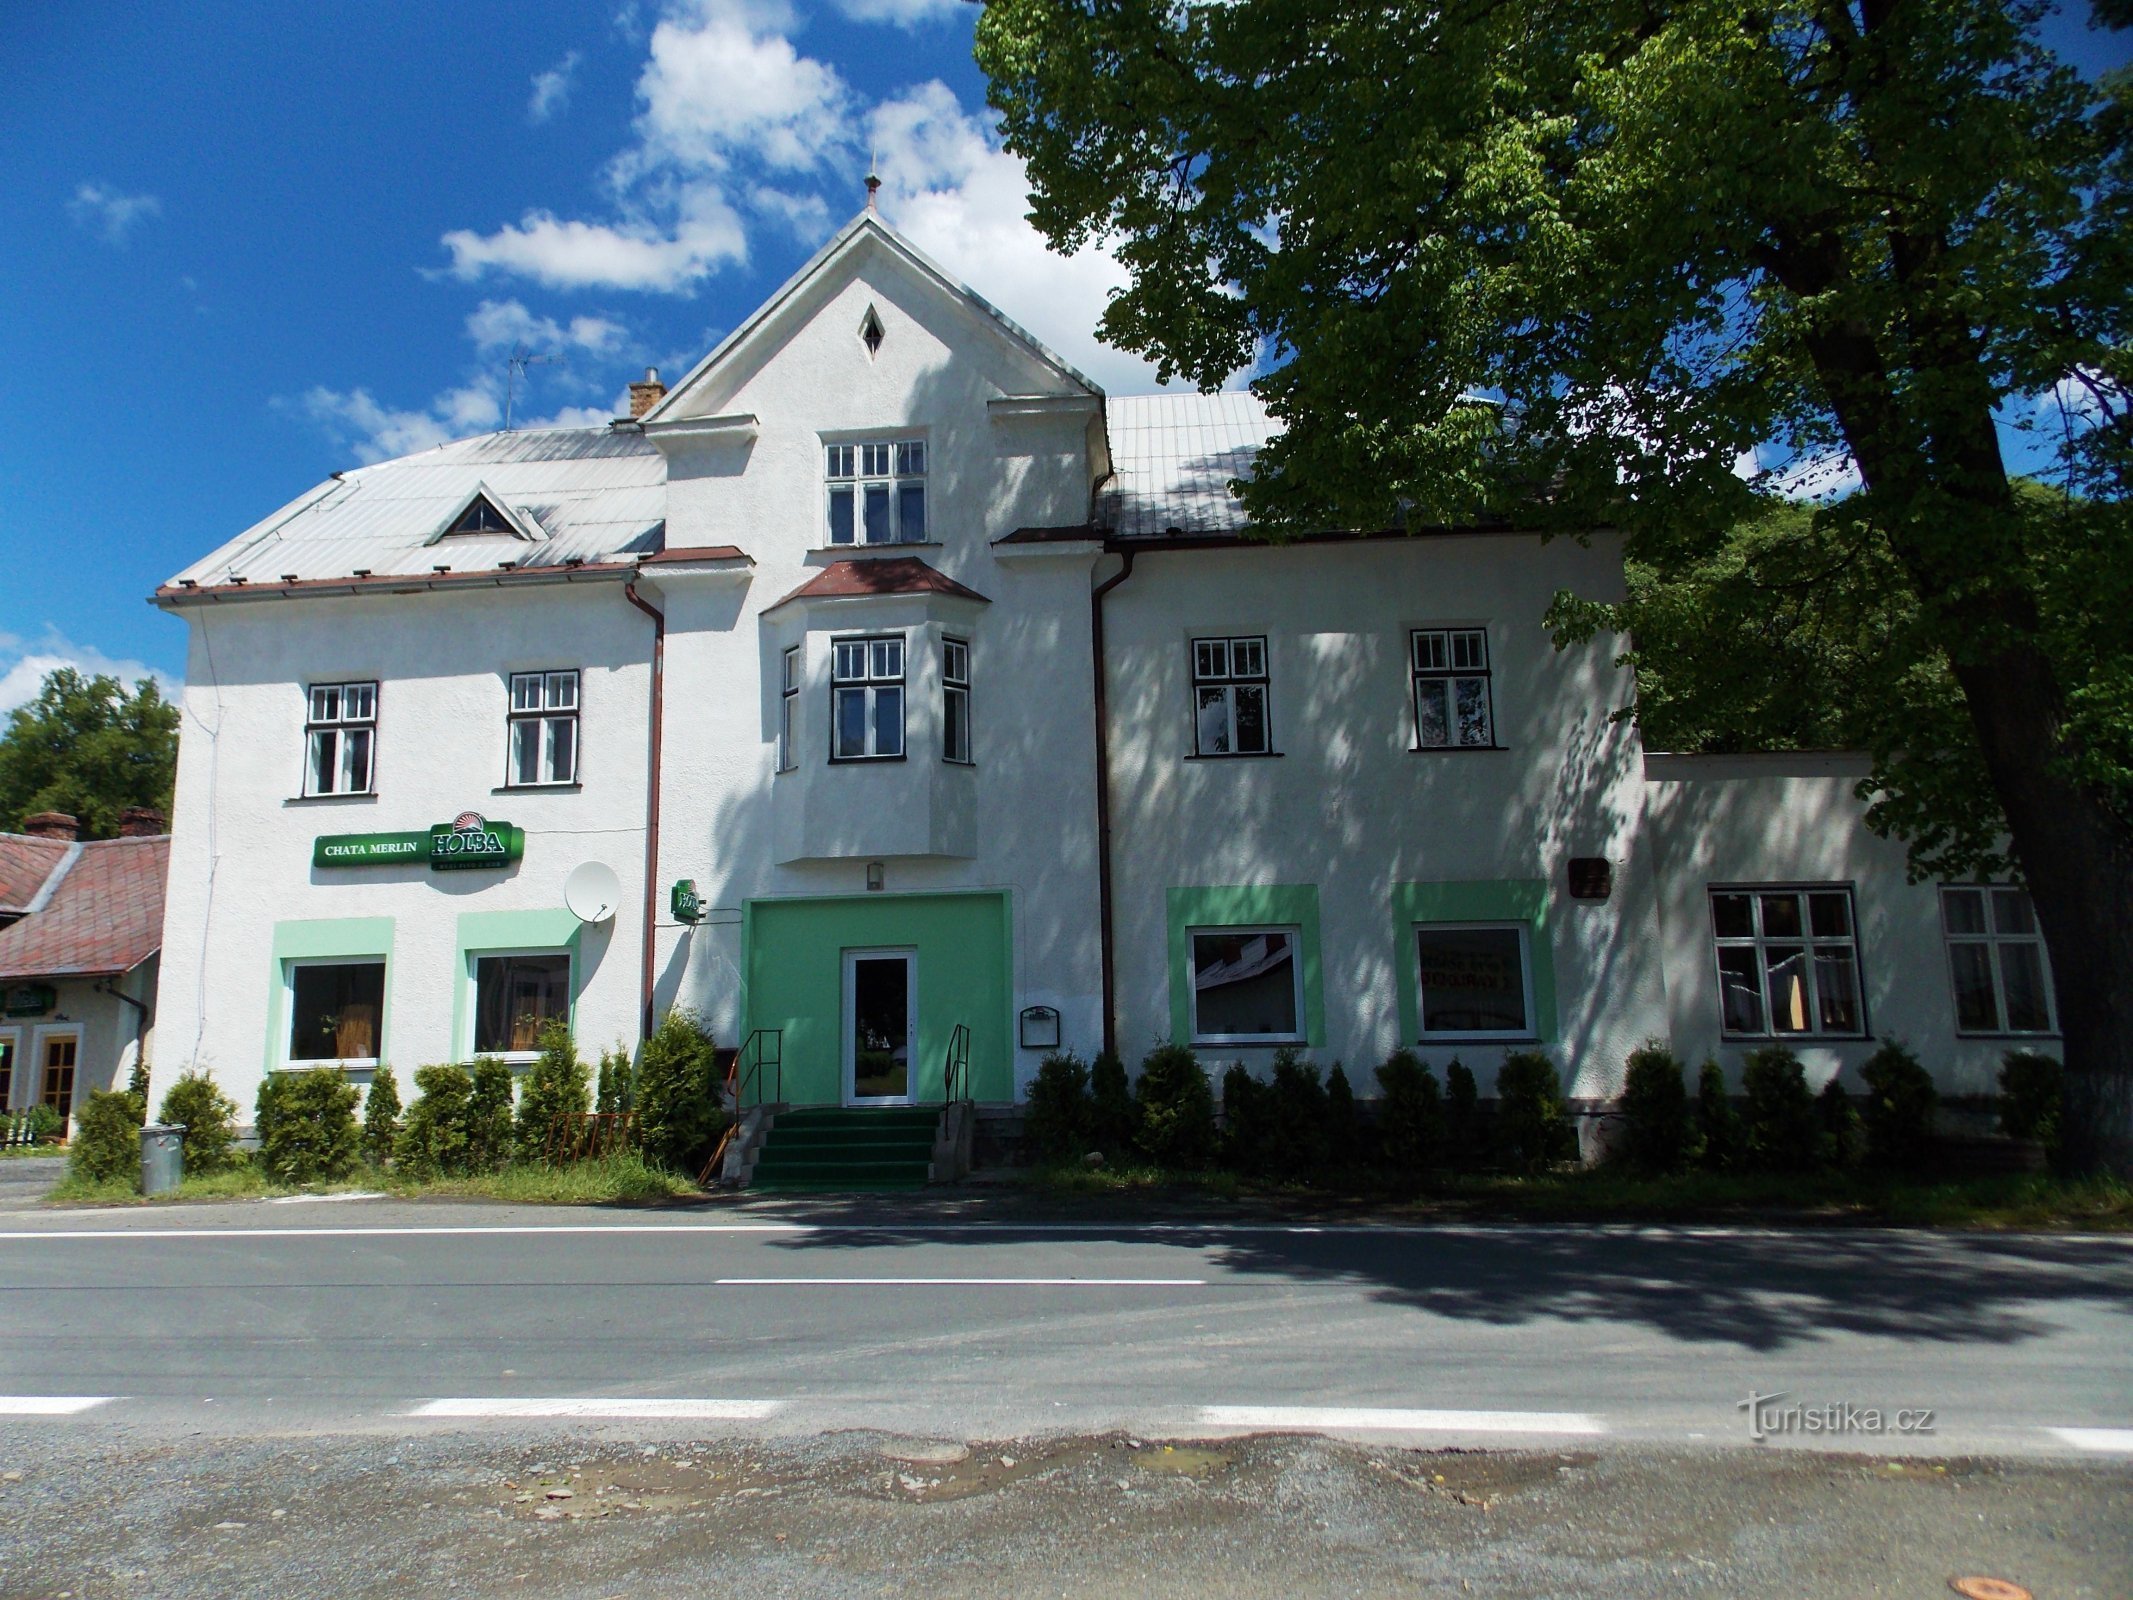 Boende i Karlovice nära Rýmařov i Merlin-stugan